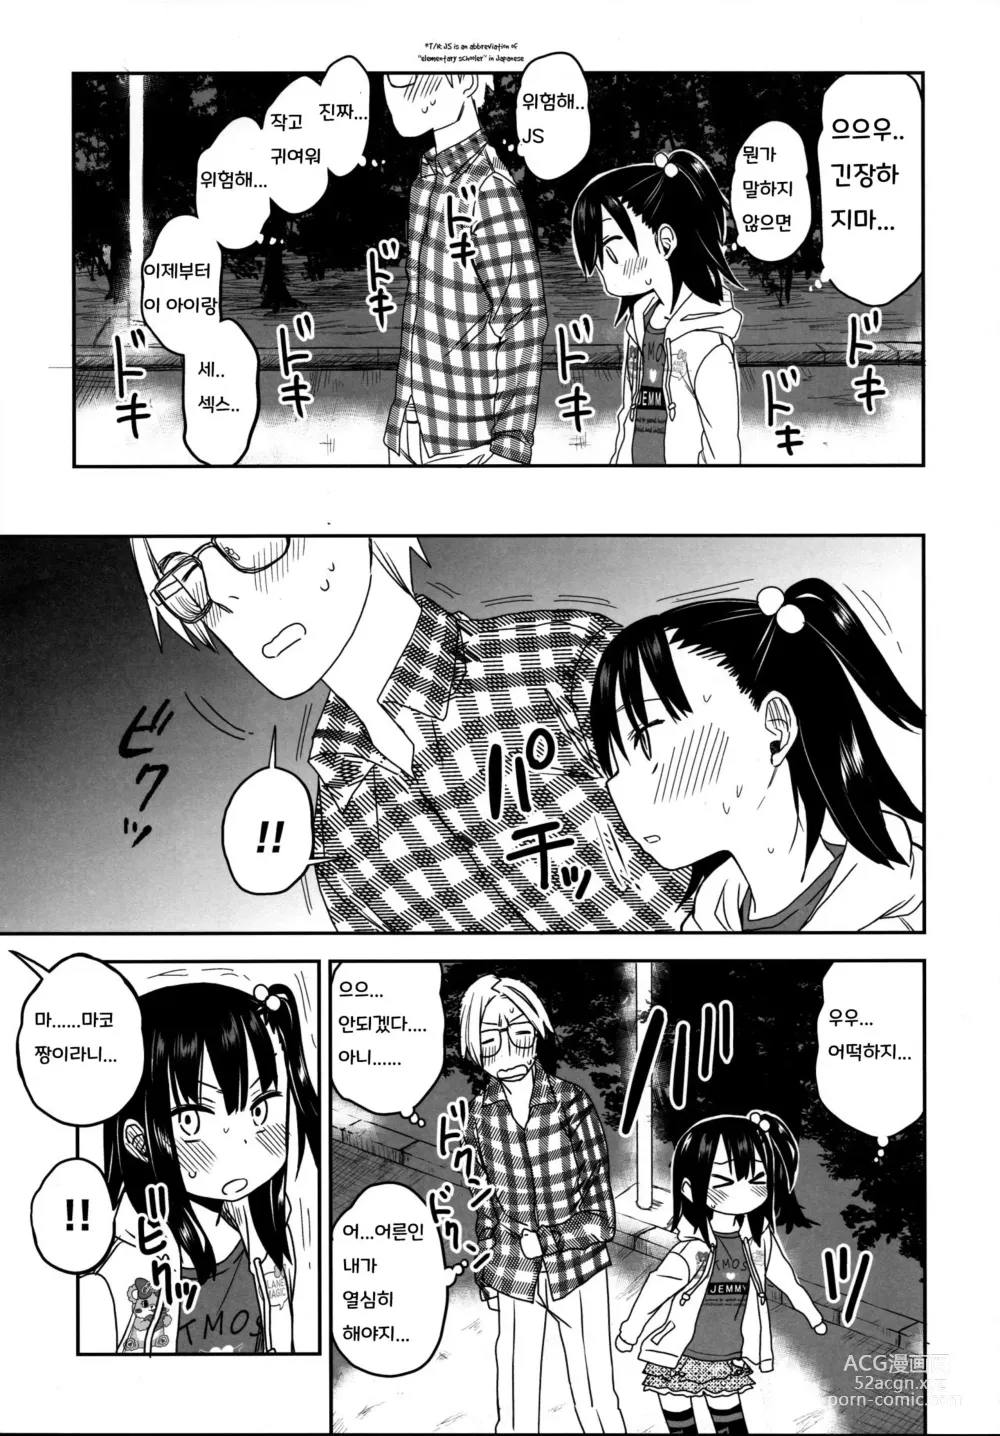 Page 11 of doujinshi Tonari no Mako-chan Season 2 Vol. 2｜이웃집 마코쨩 Season 2 Vol.2